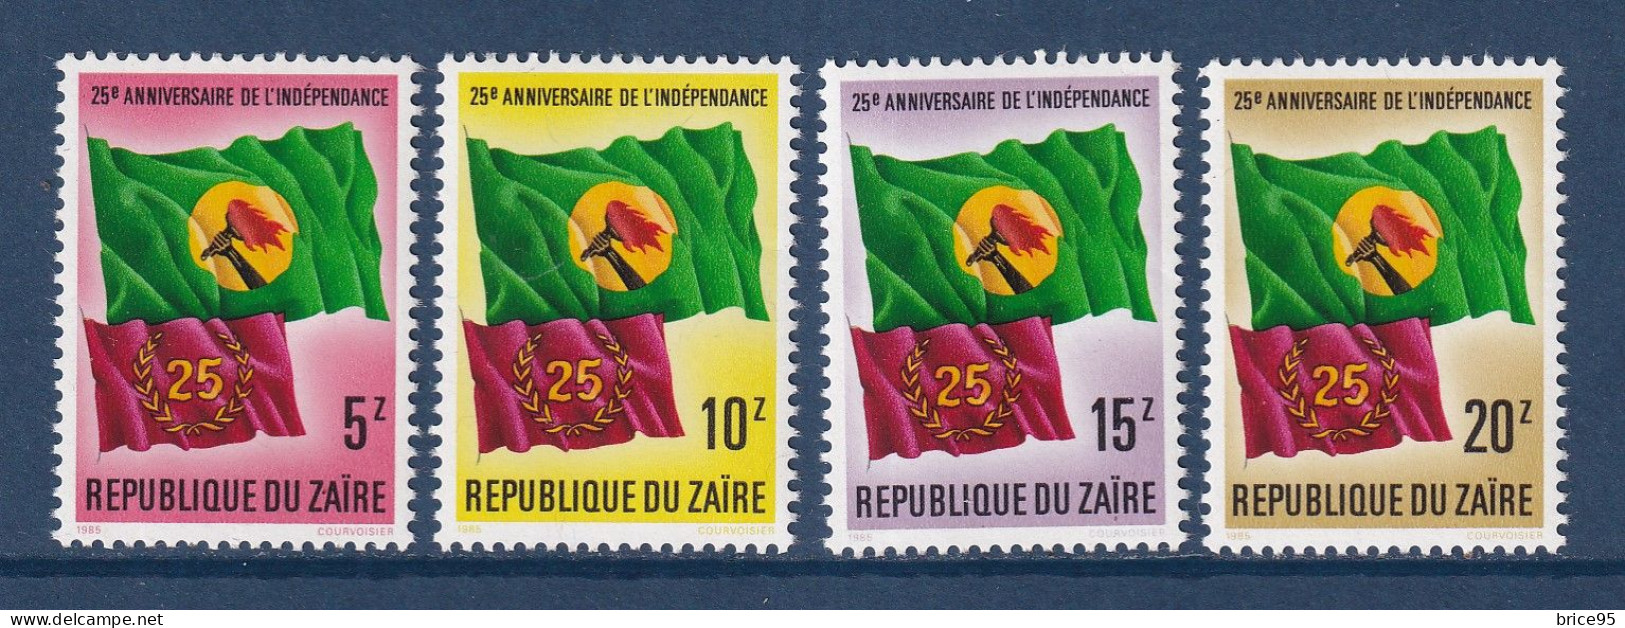 Zaïre - YT N° 1212 à 1215 ** - Neuf Sans Charnière - 1985 - Neufs